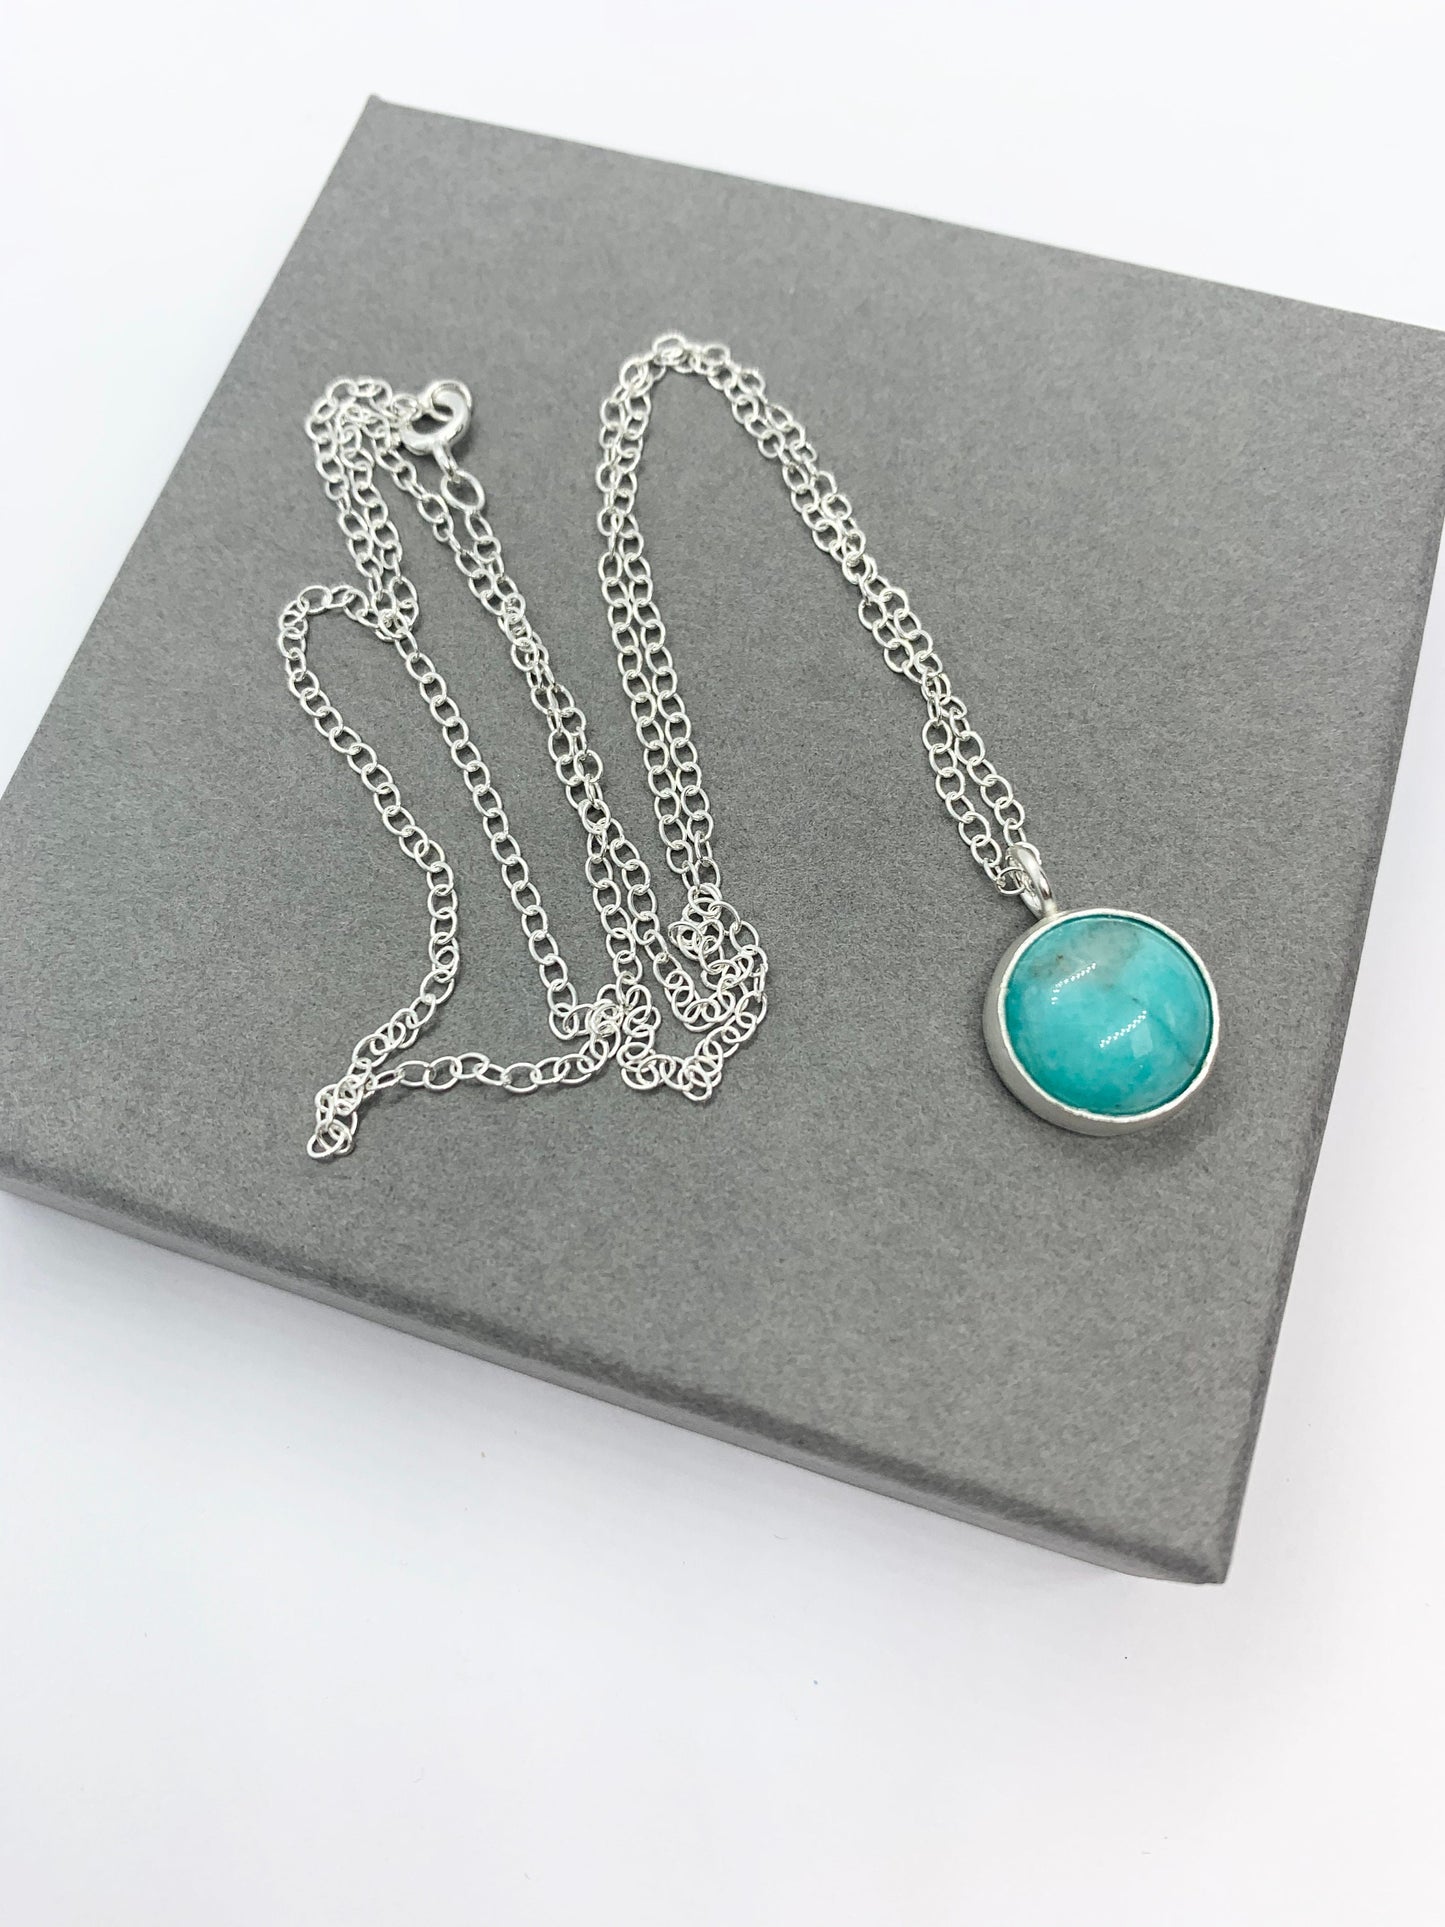 Aqua blue necklace